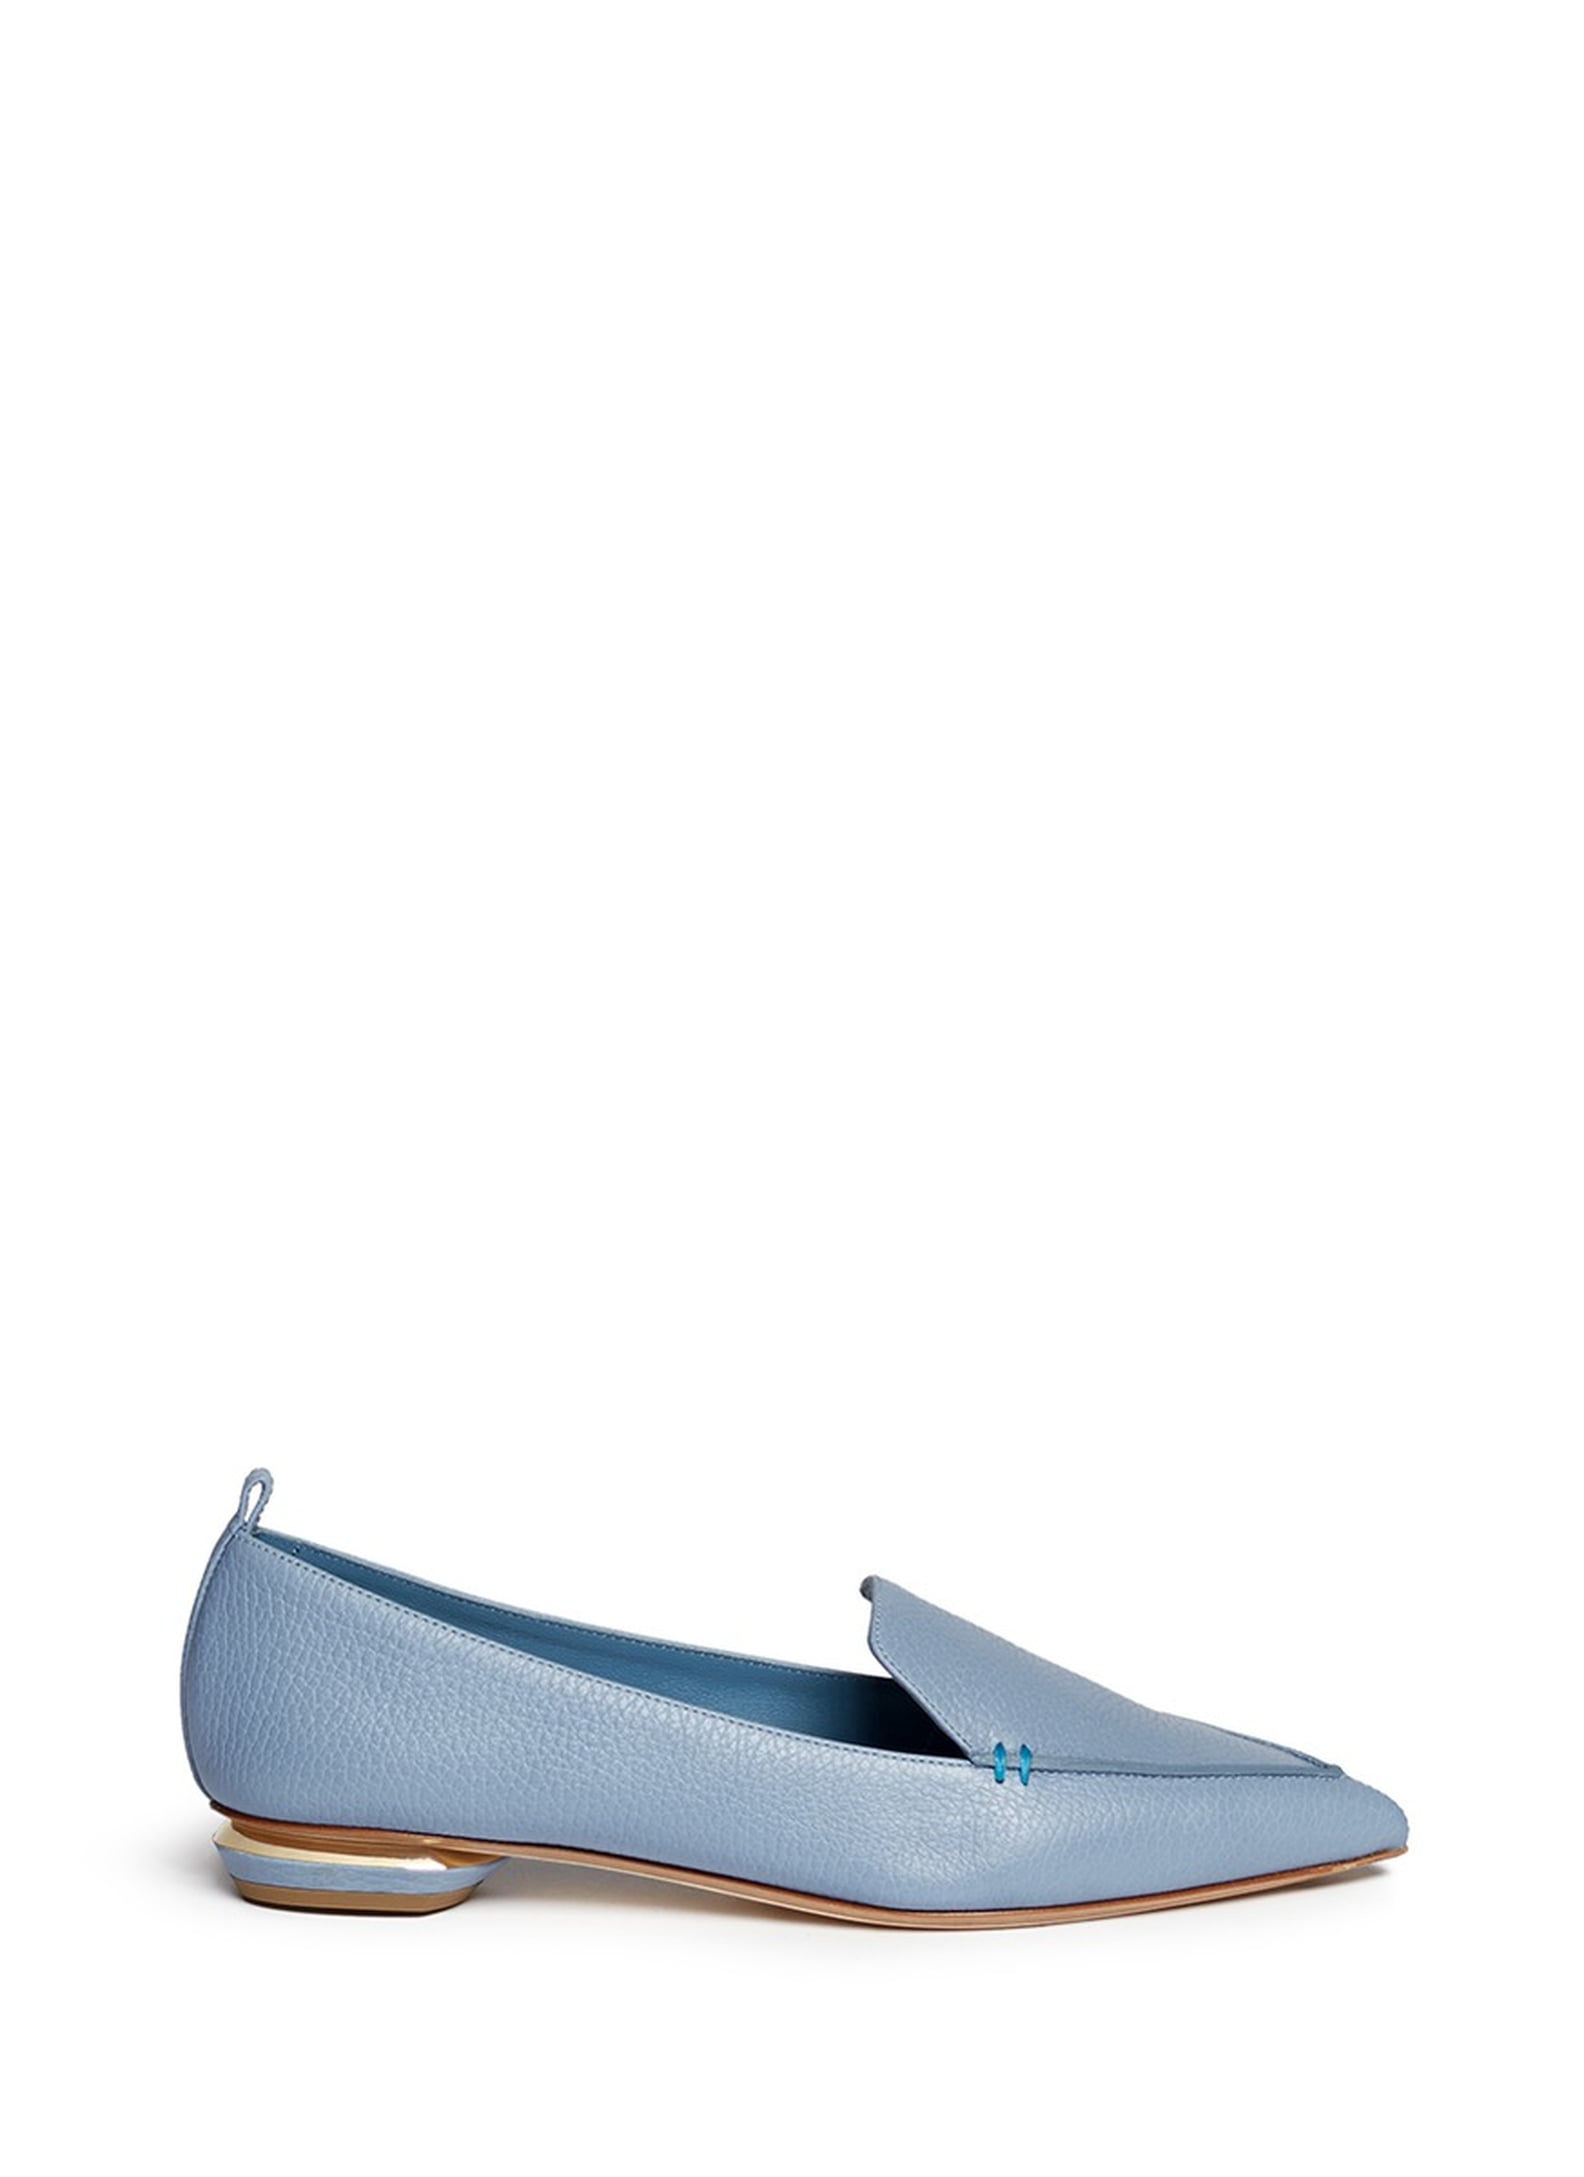 Princess Diana's Shoe Style | POPSUGAR Fashion